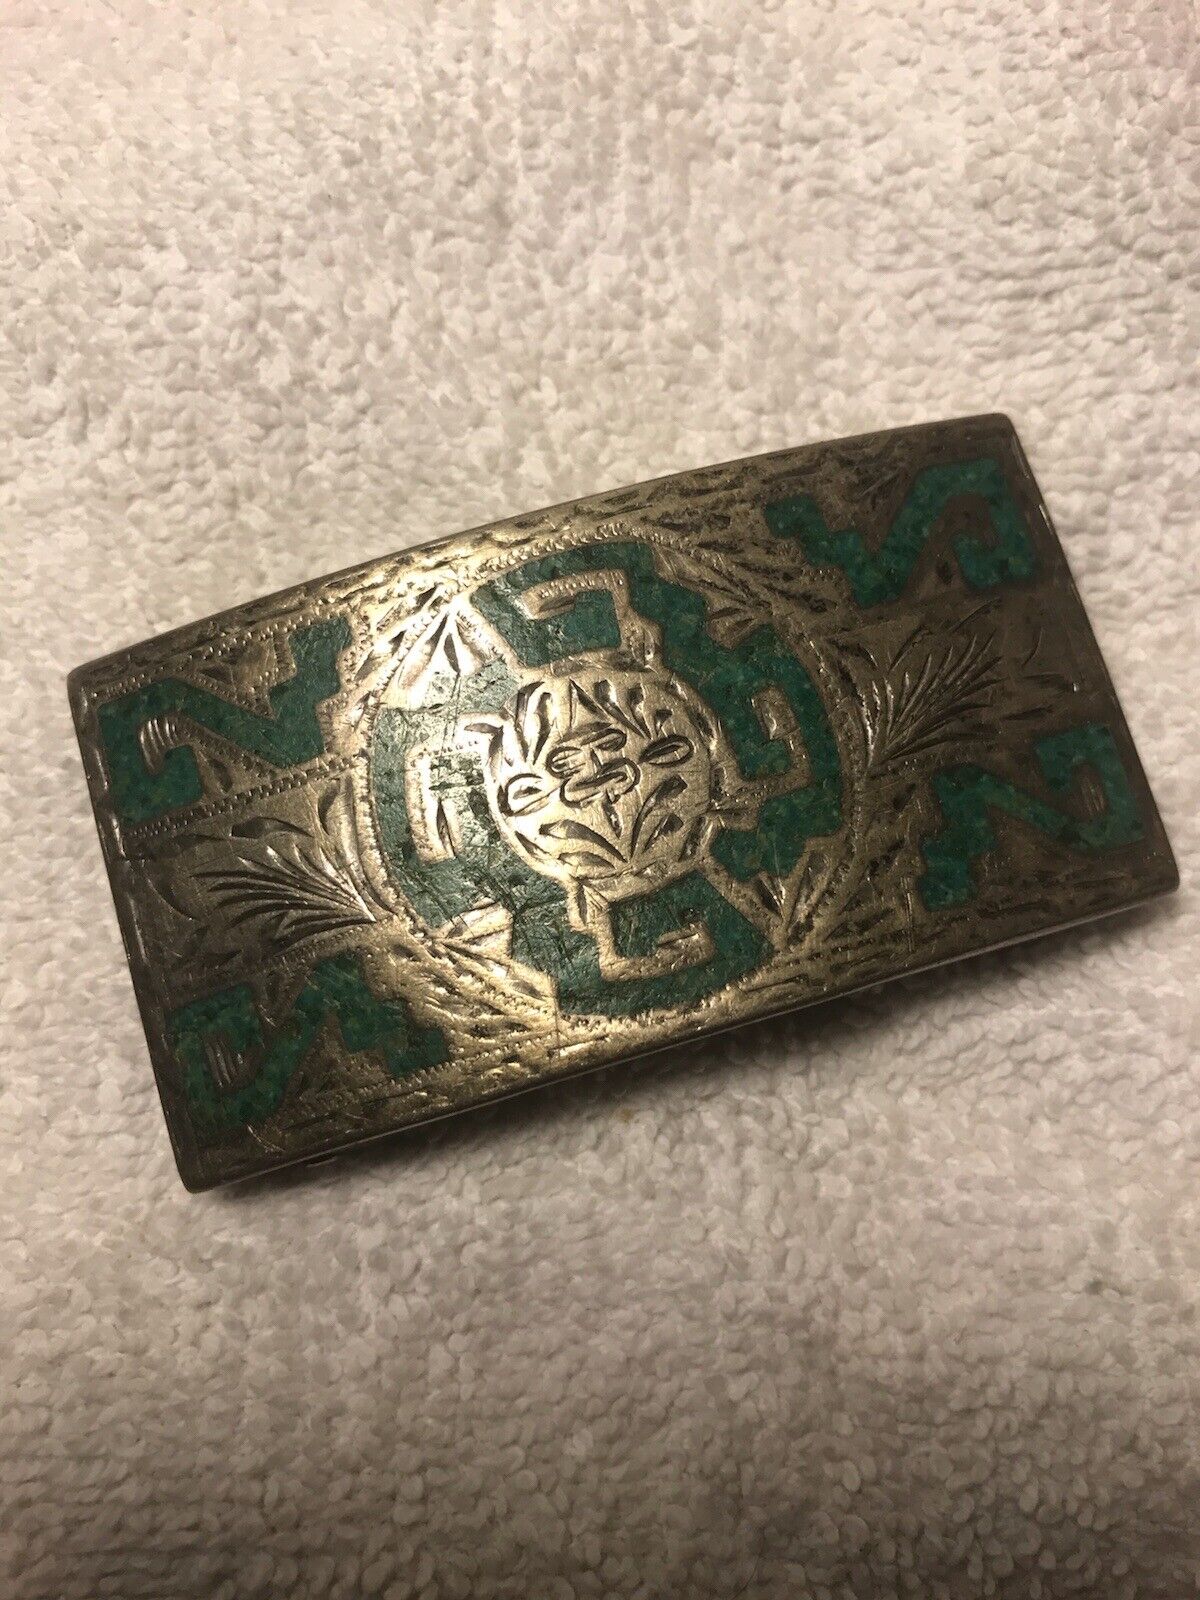 Vintage VHLC solid sterling silver Belt Buckle - Mexico